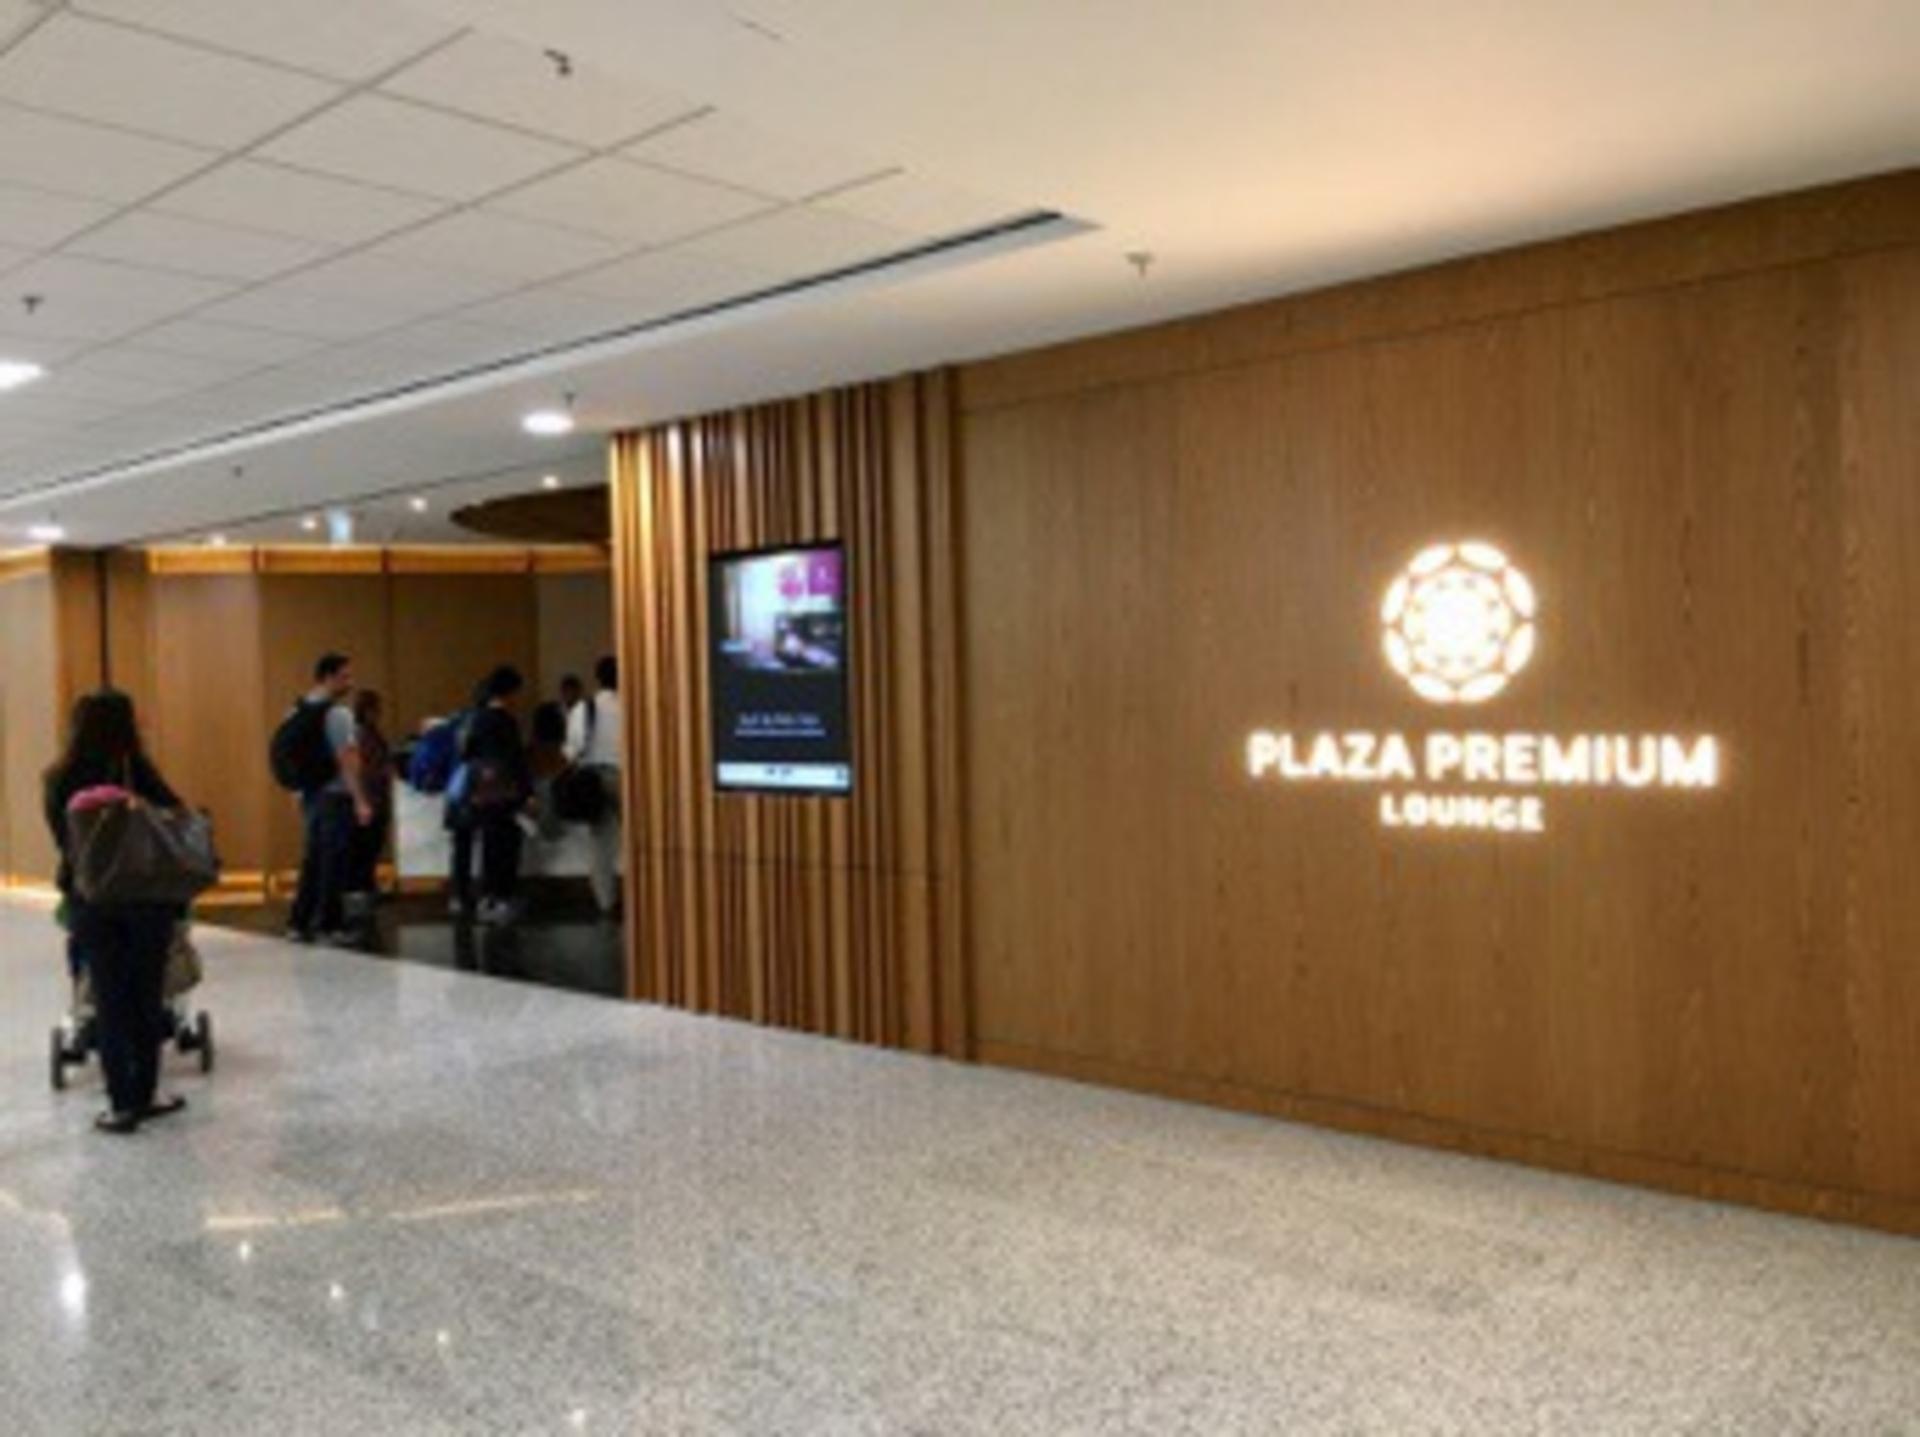 Plaza Premium Lounge (Domestic) image 16 of 38